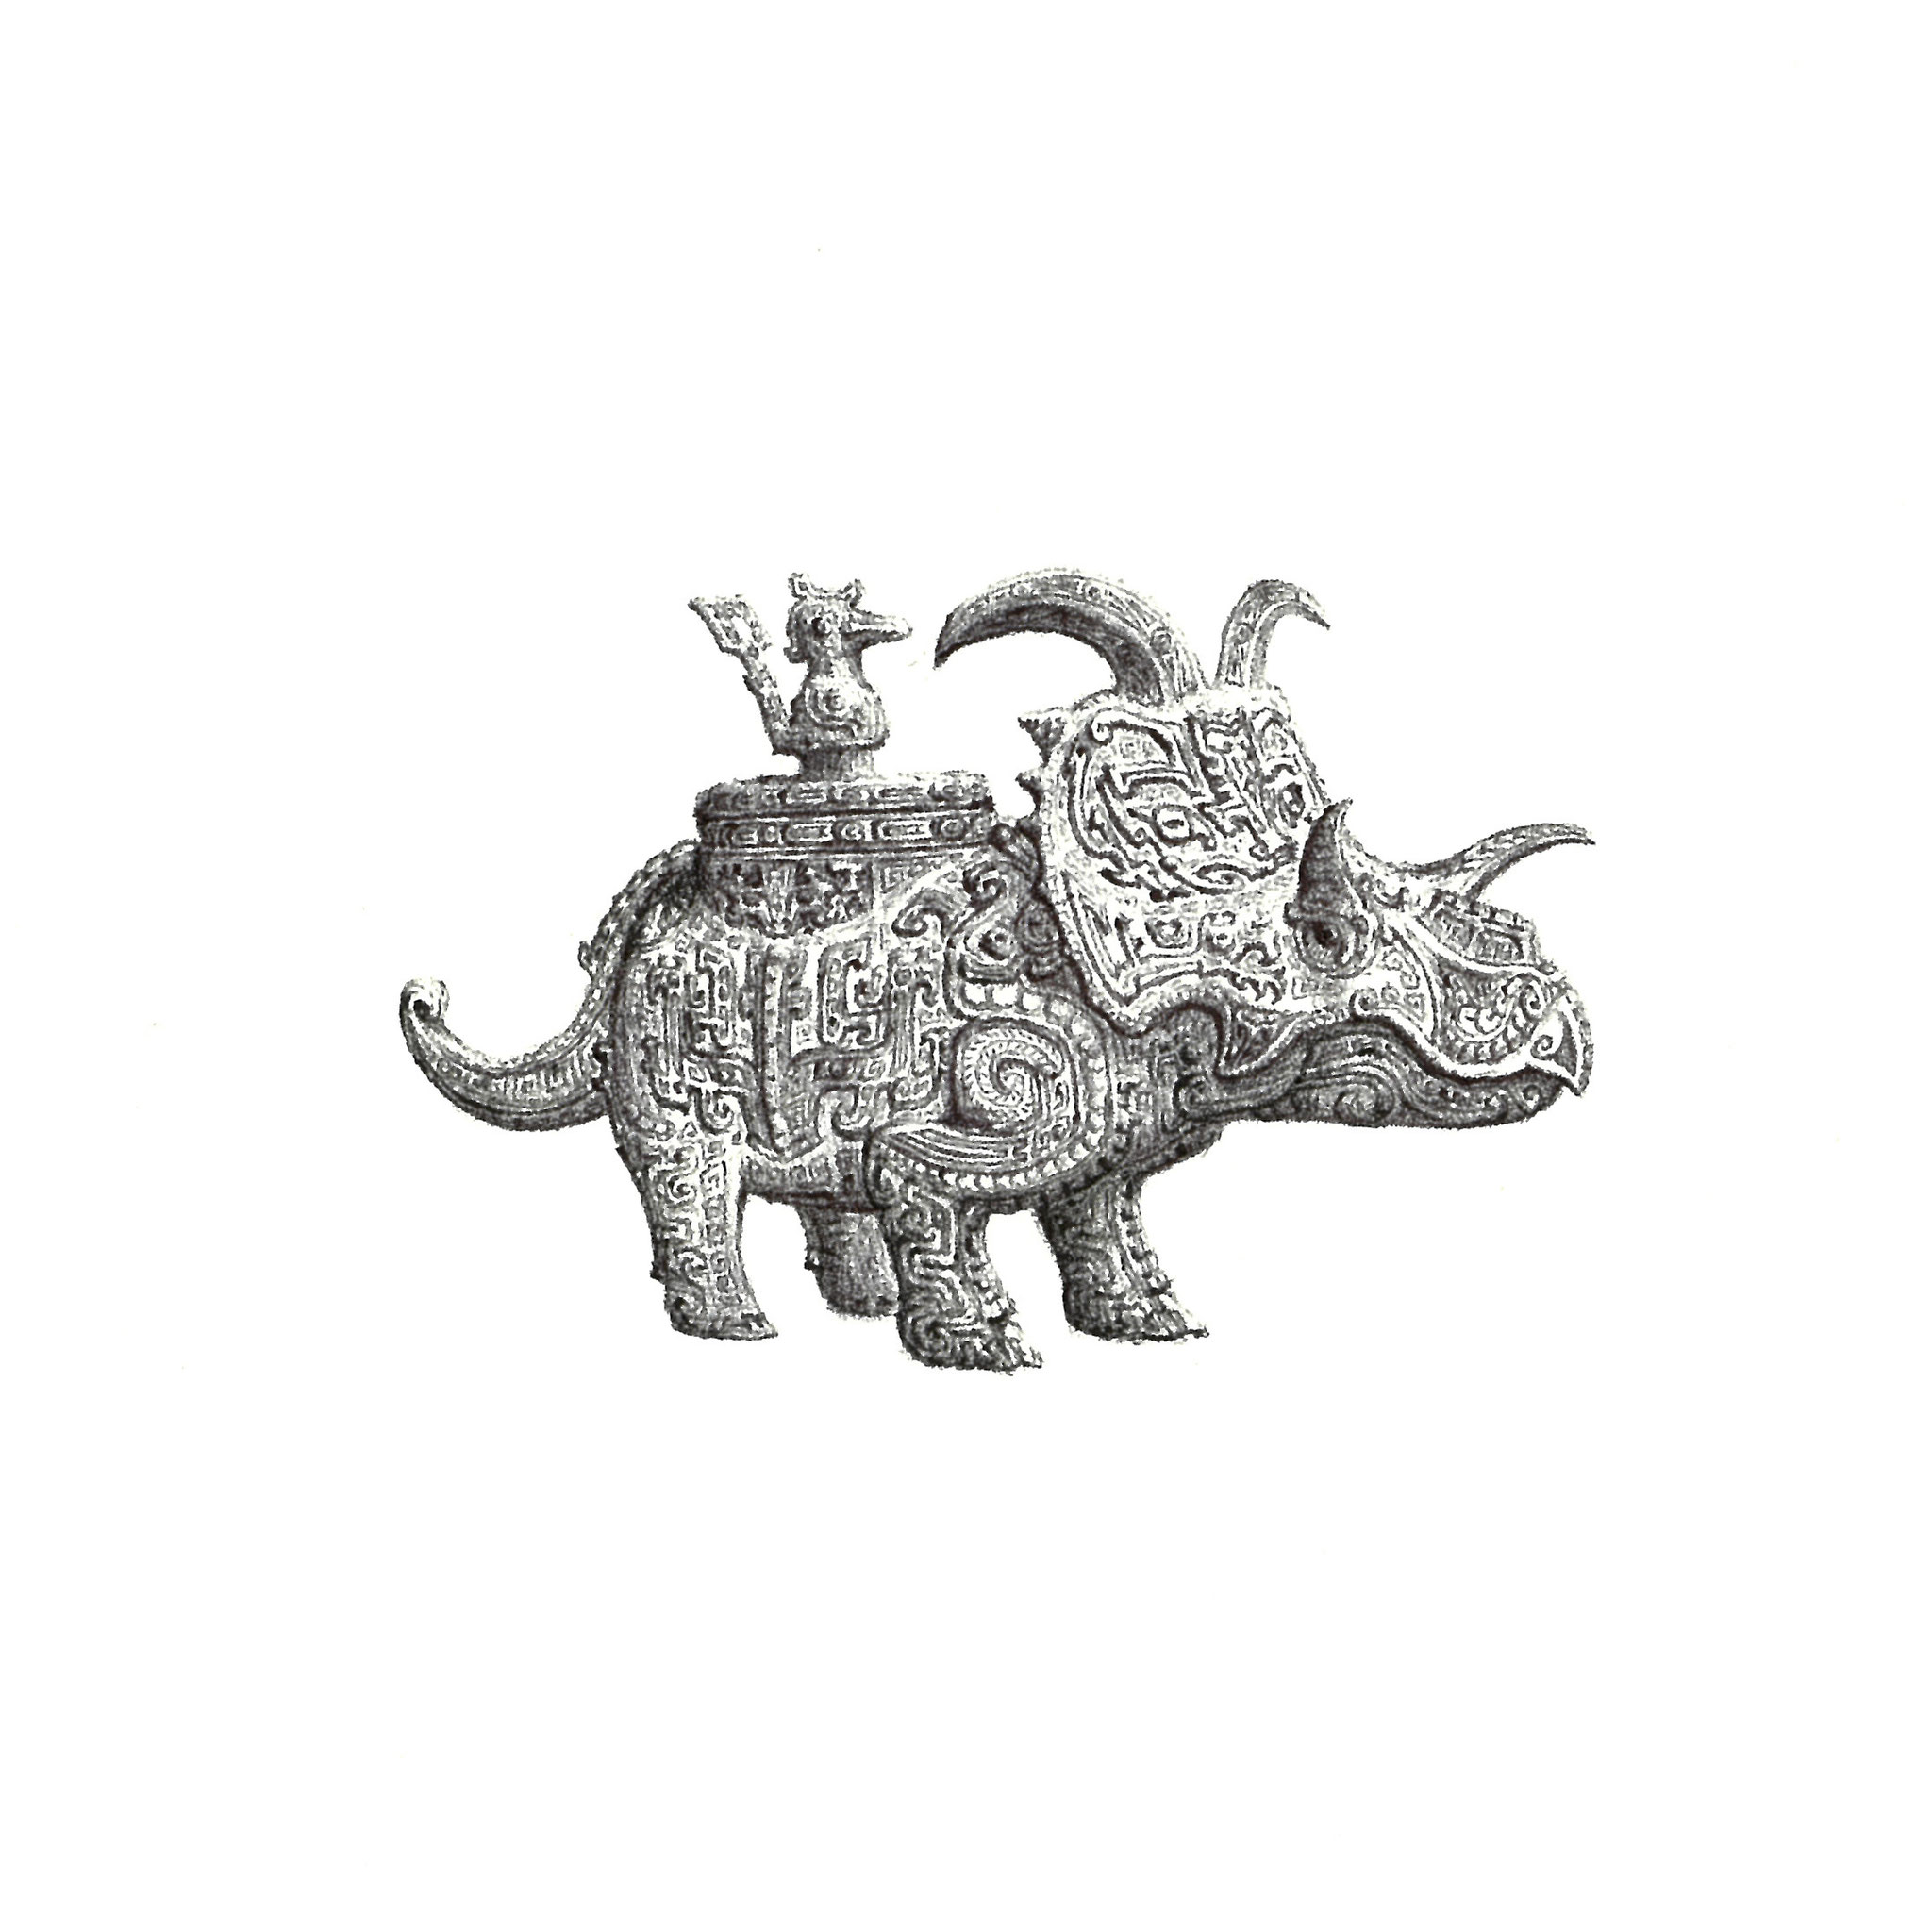 Ritual Bronze: Albertoceratops / 2019 / Ballpoint pen